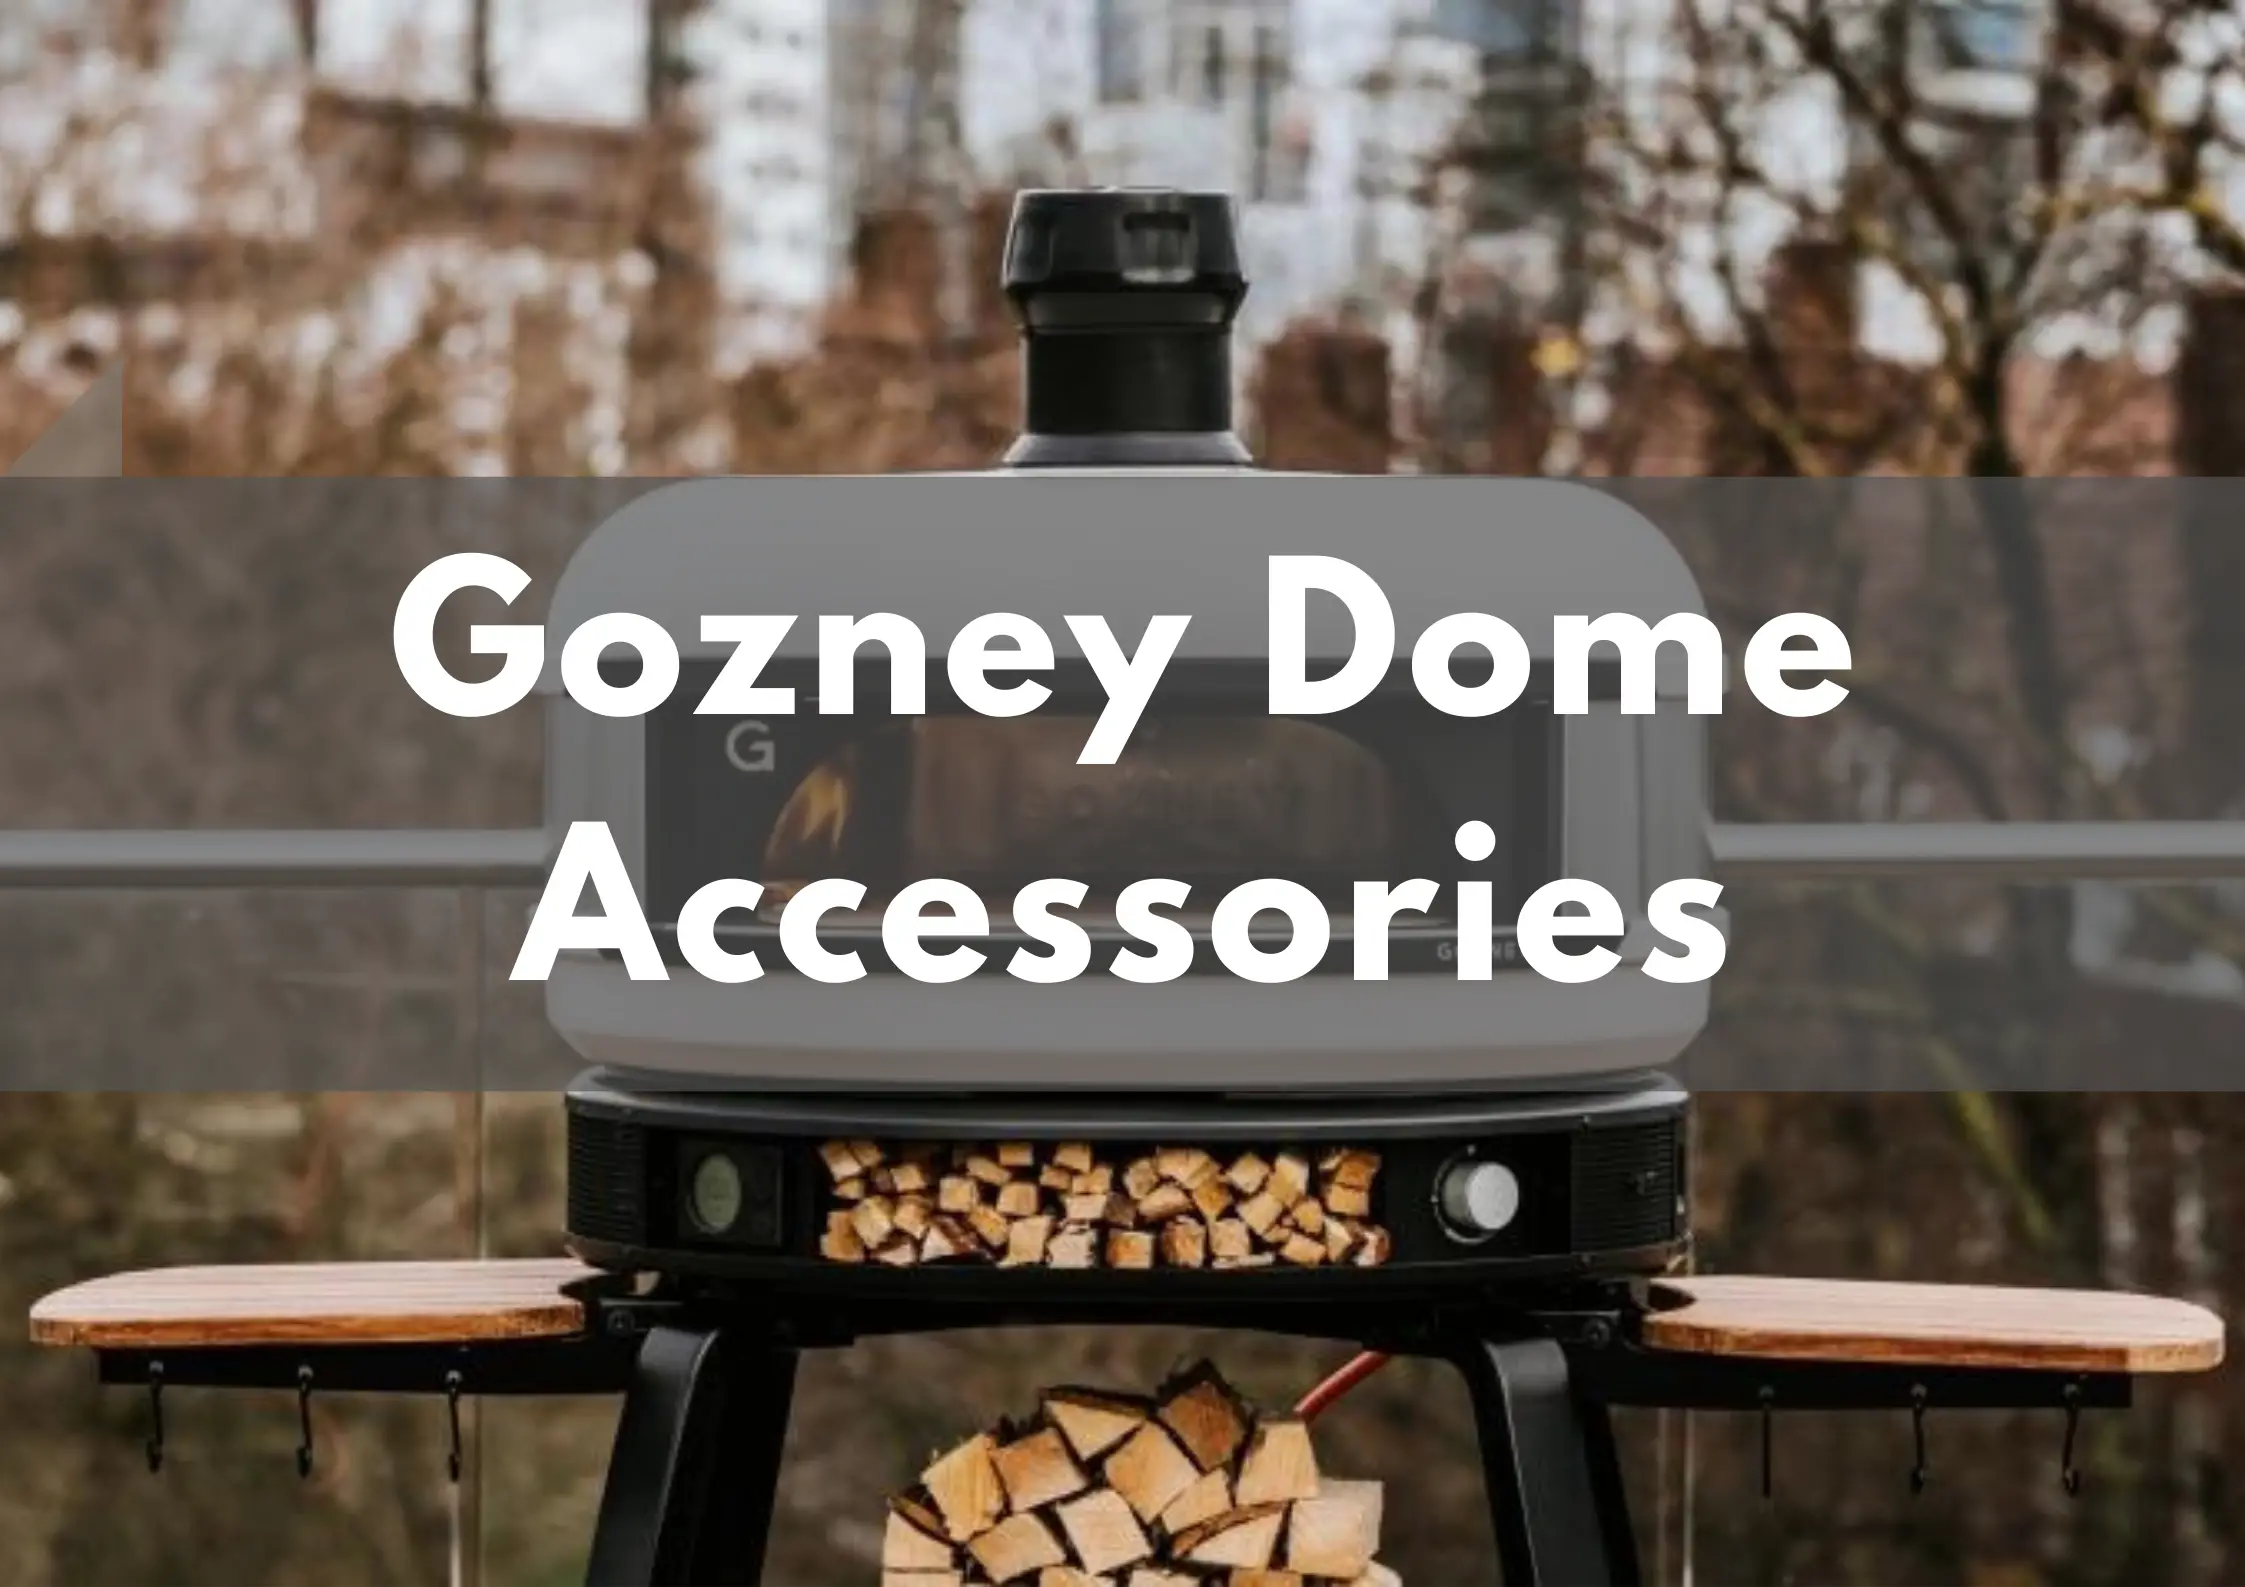 Accessories for the Gozney Dome